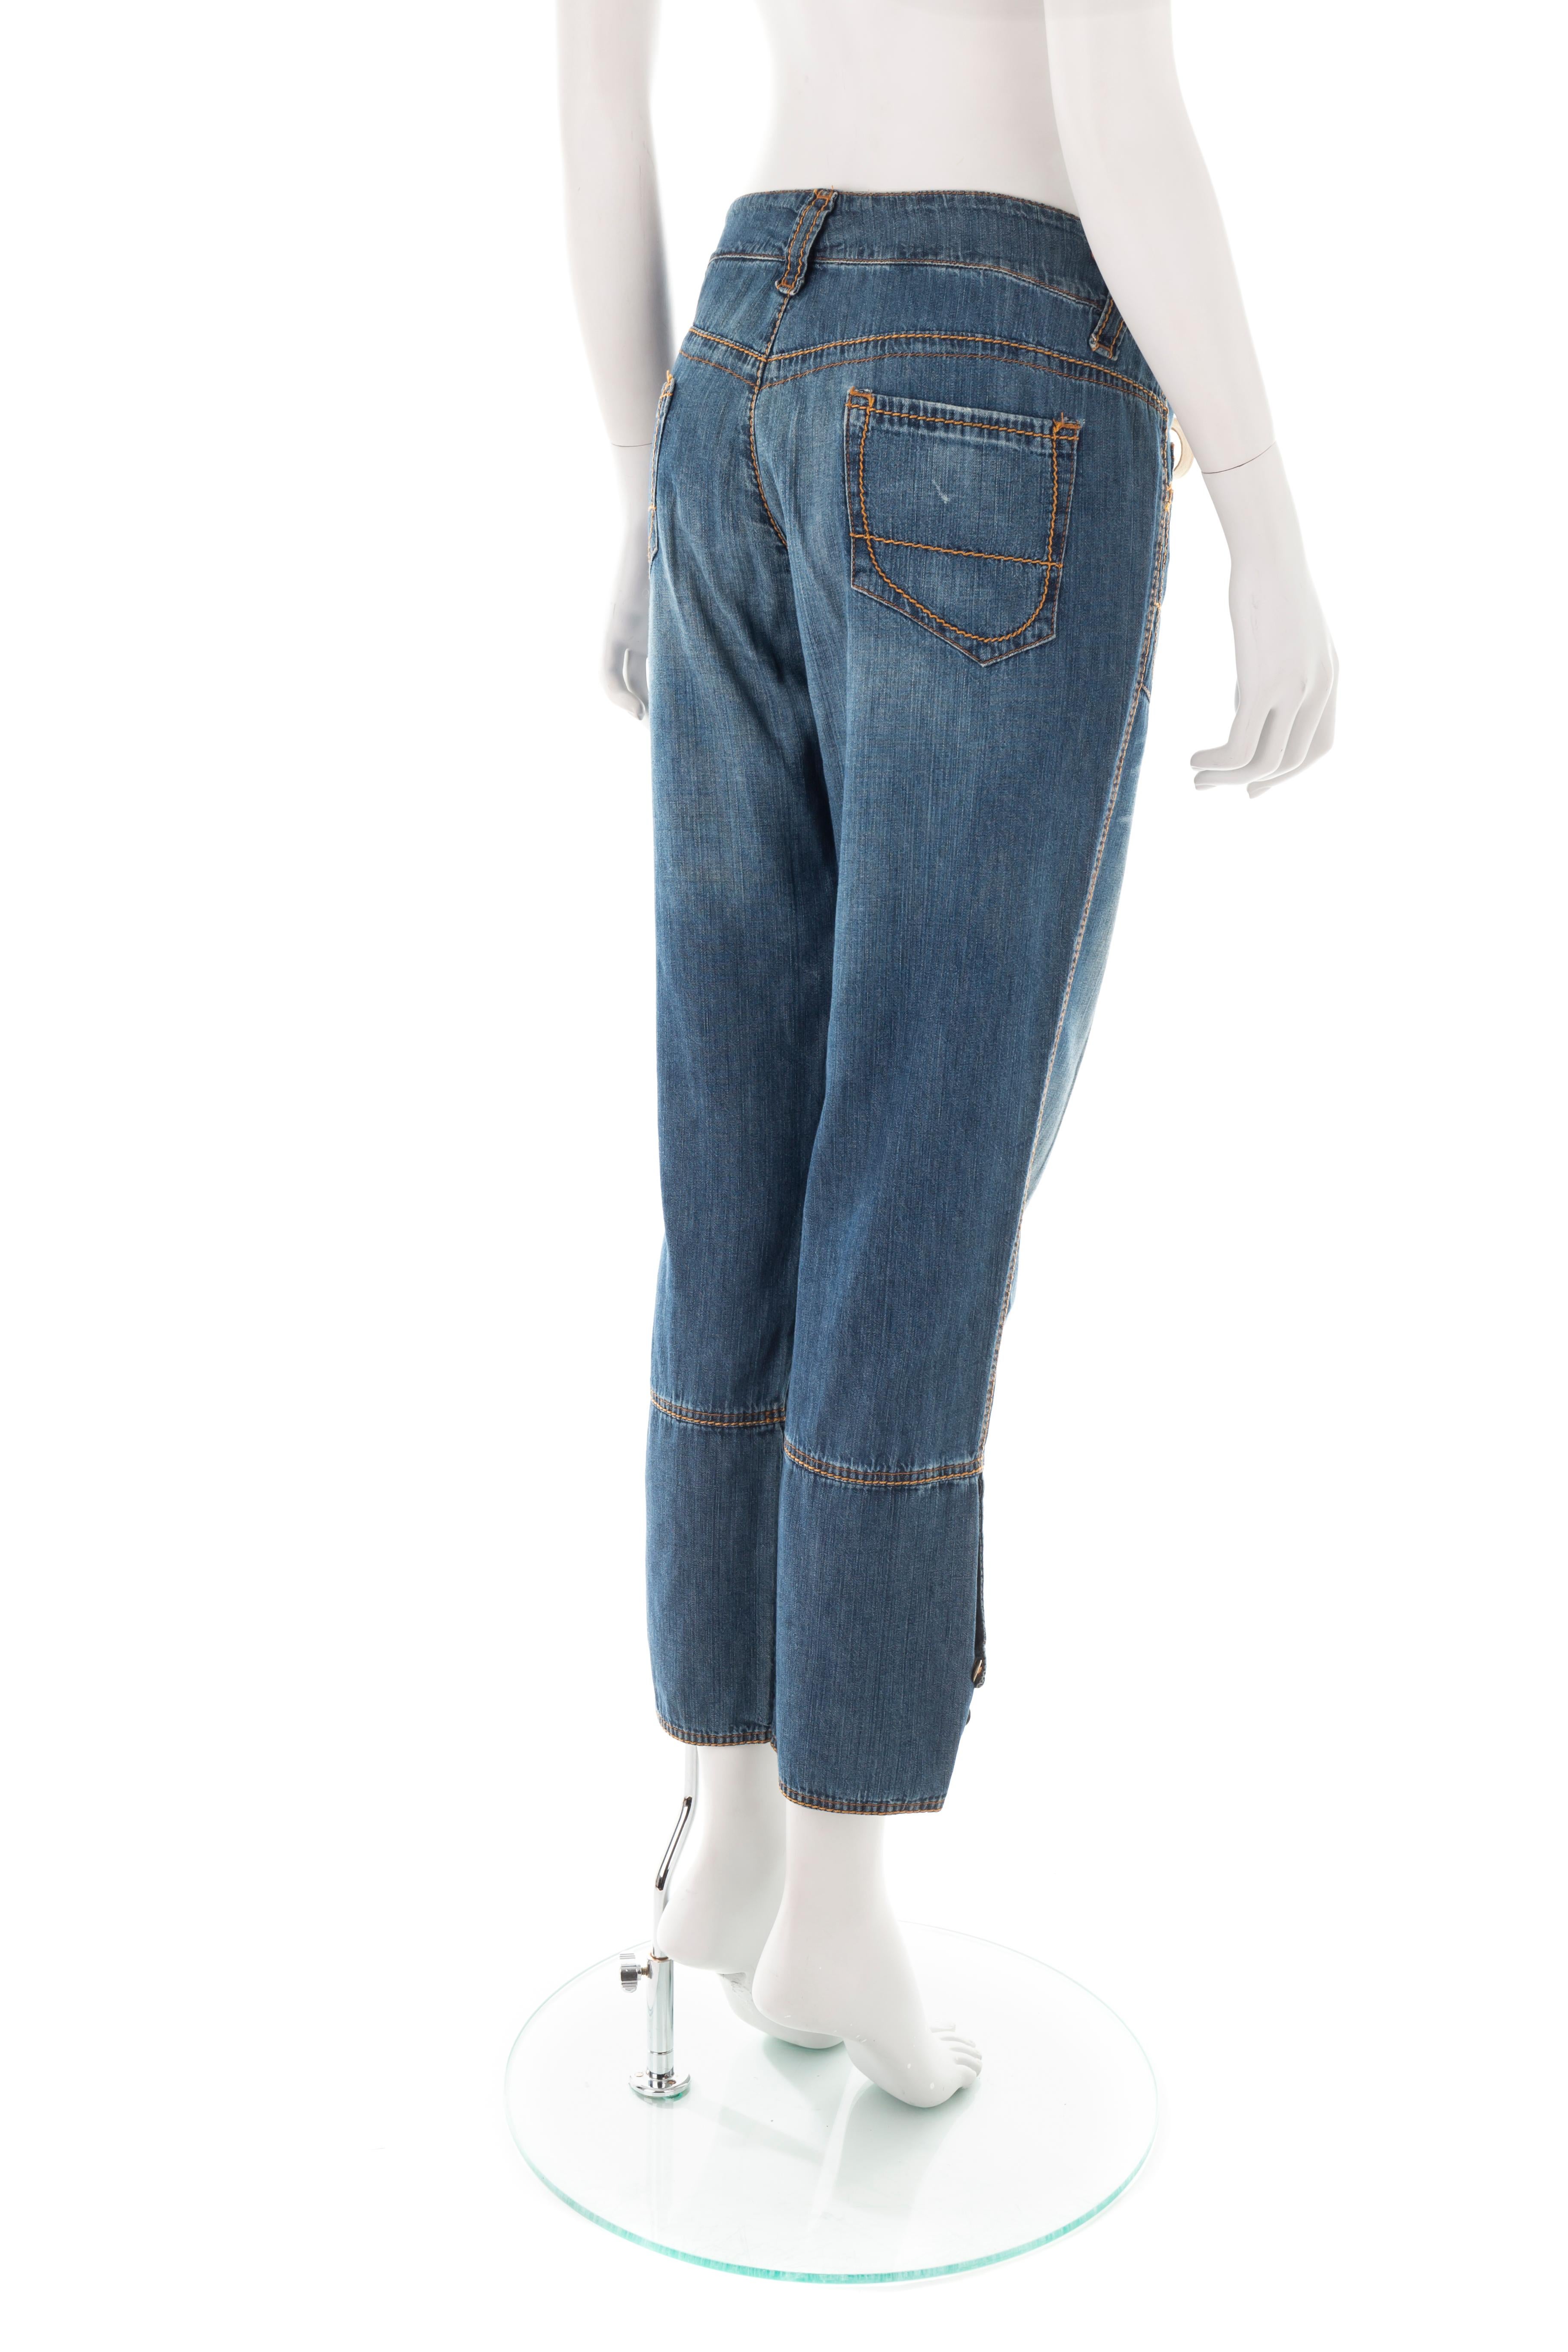 Gray Ermanno Scervino S/S 2005 Audrey Hepburn capri jeans For Sale